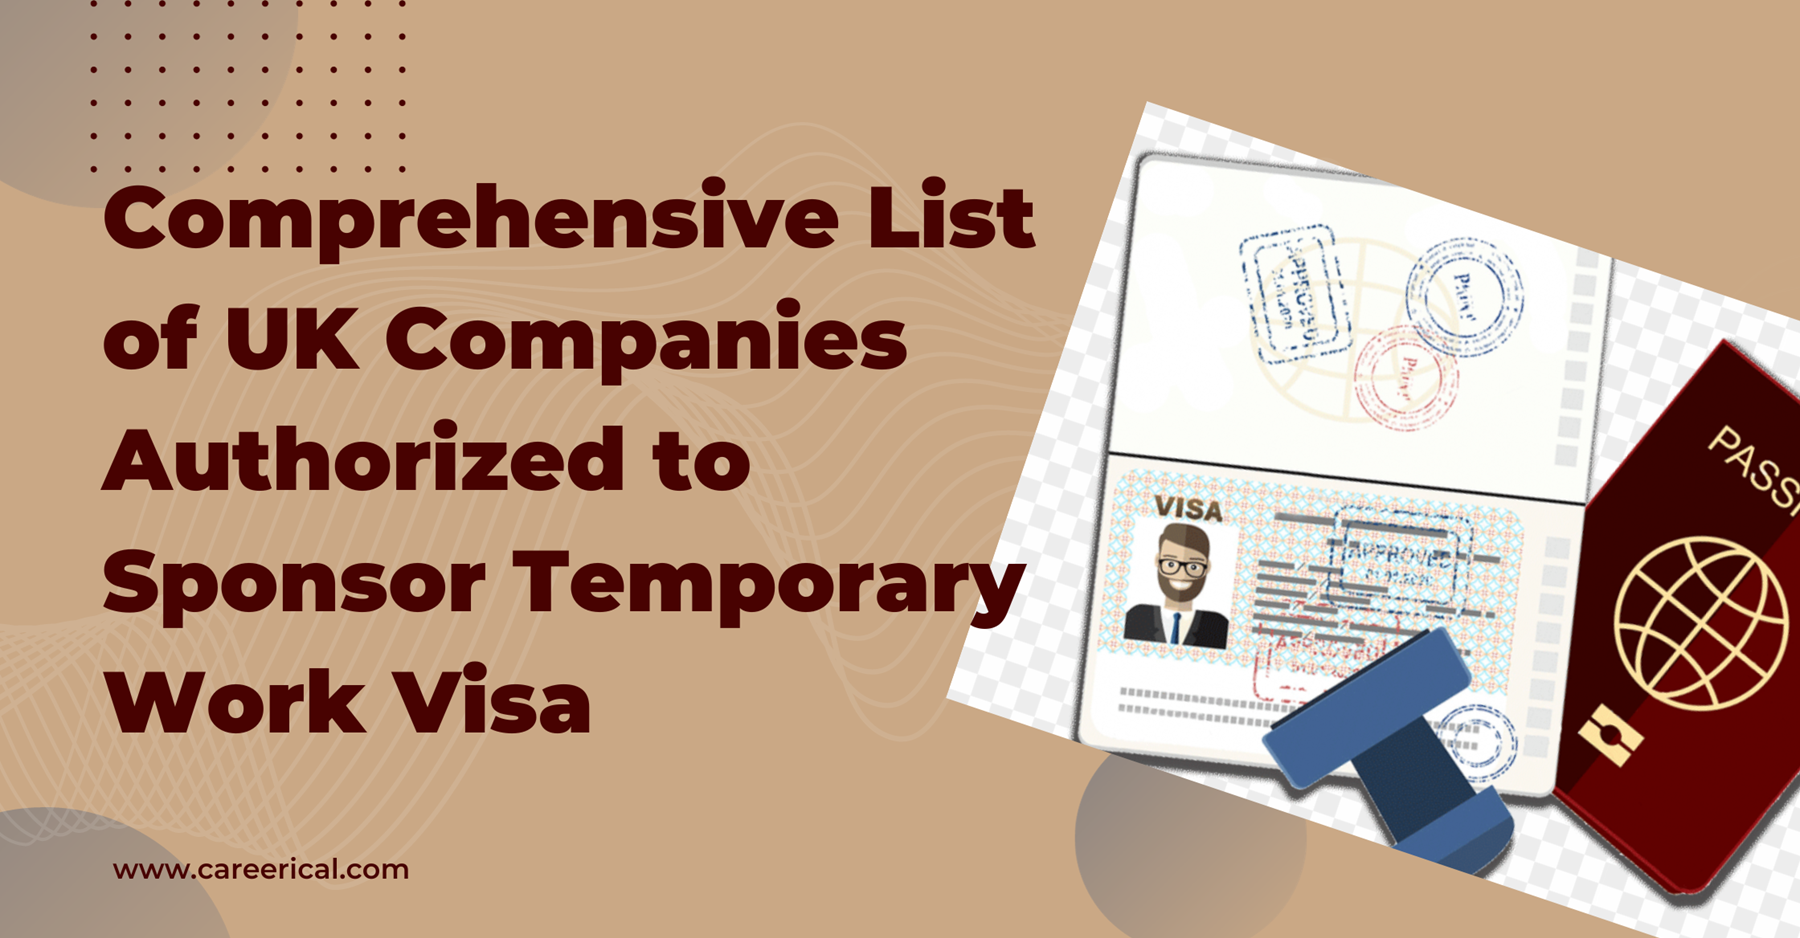 Comprehensive List of UK Companies Authorized to Sponsor Temporary Work Visa